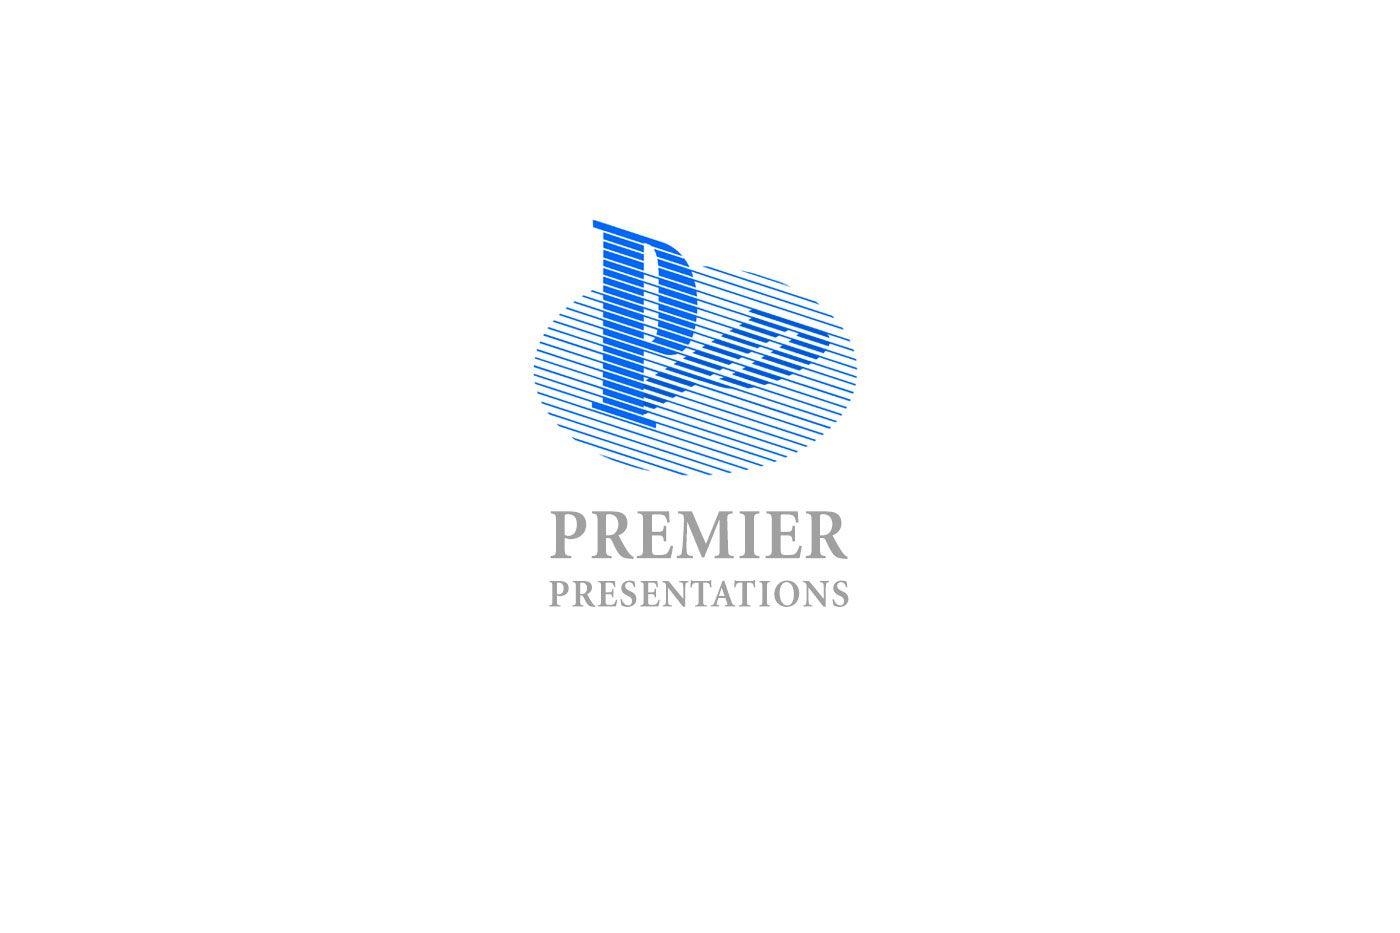 Google Presentation Logo - Premier Presentations logo